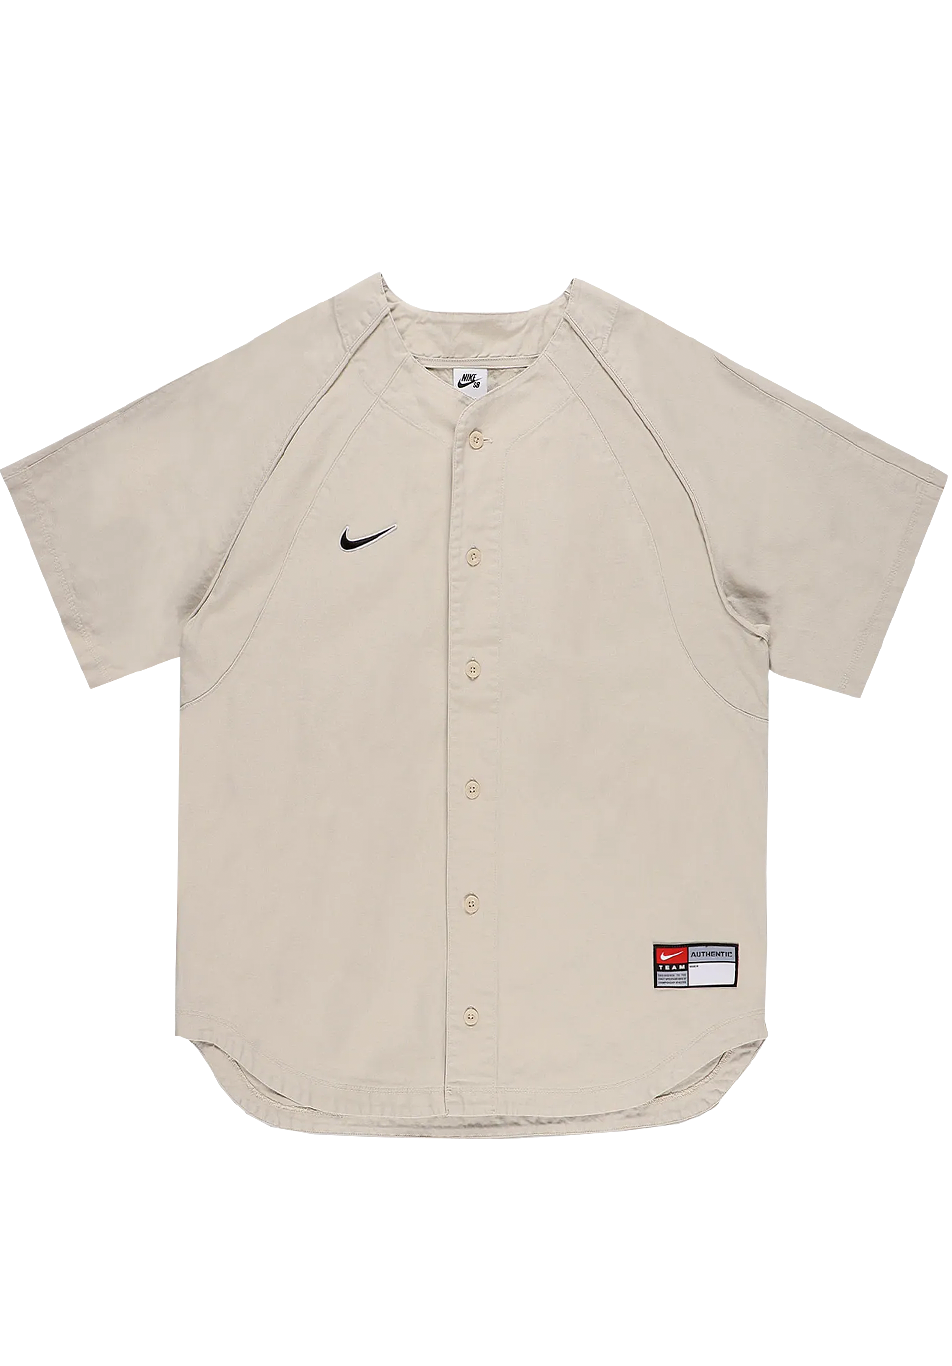 South Korea National Team Nike Baseball Button-Up Jersey - Black